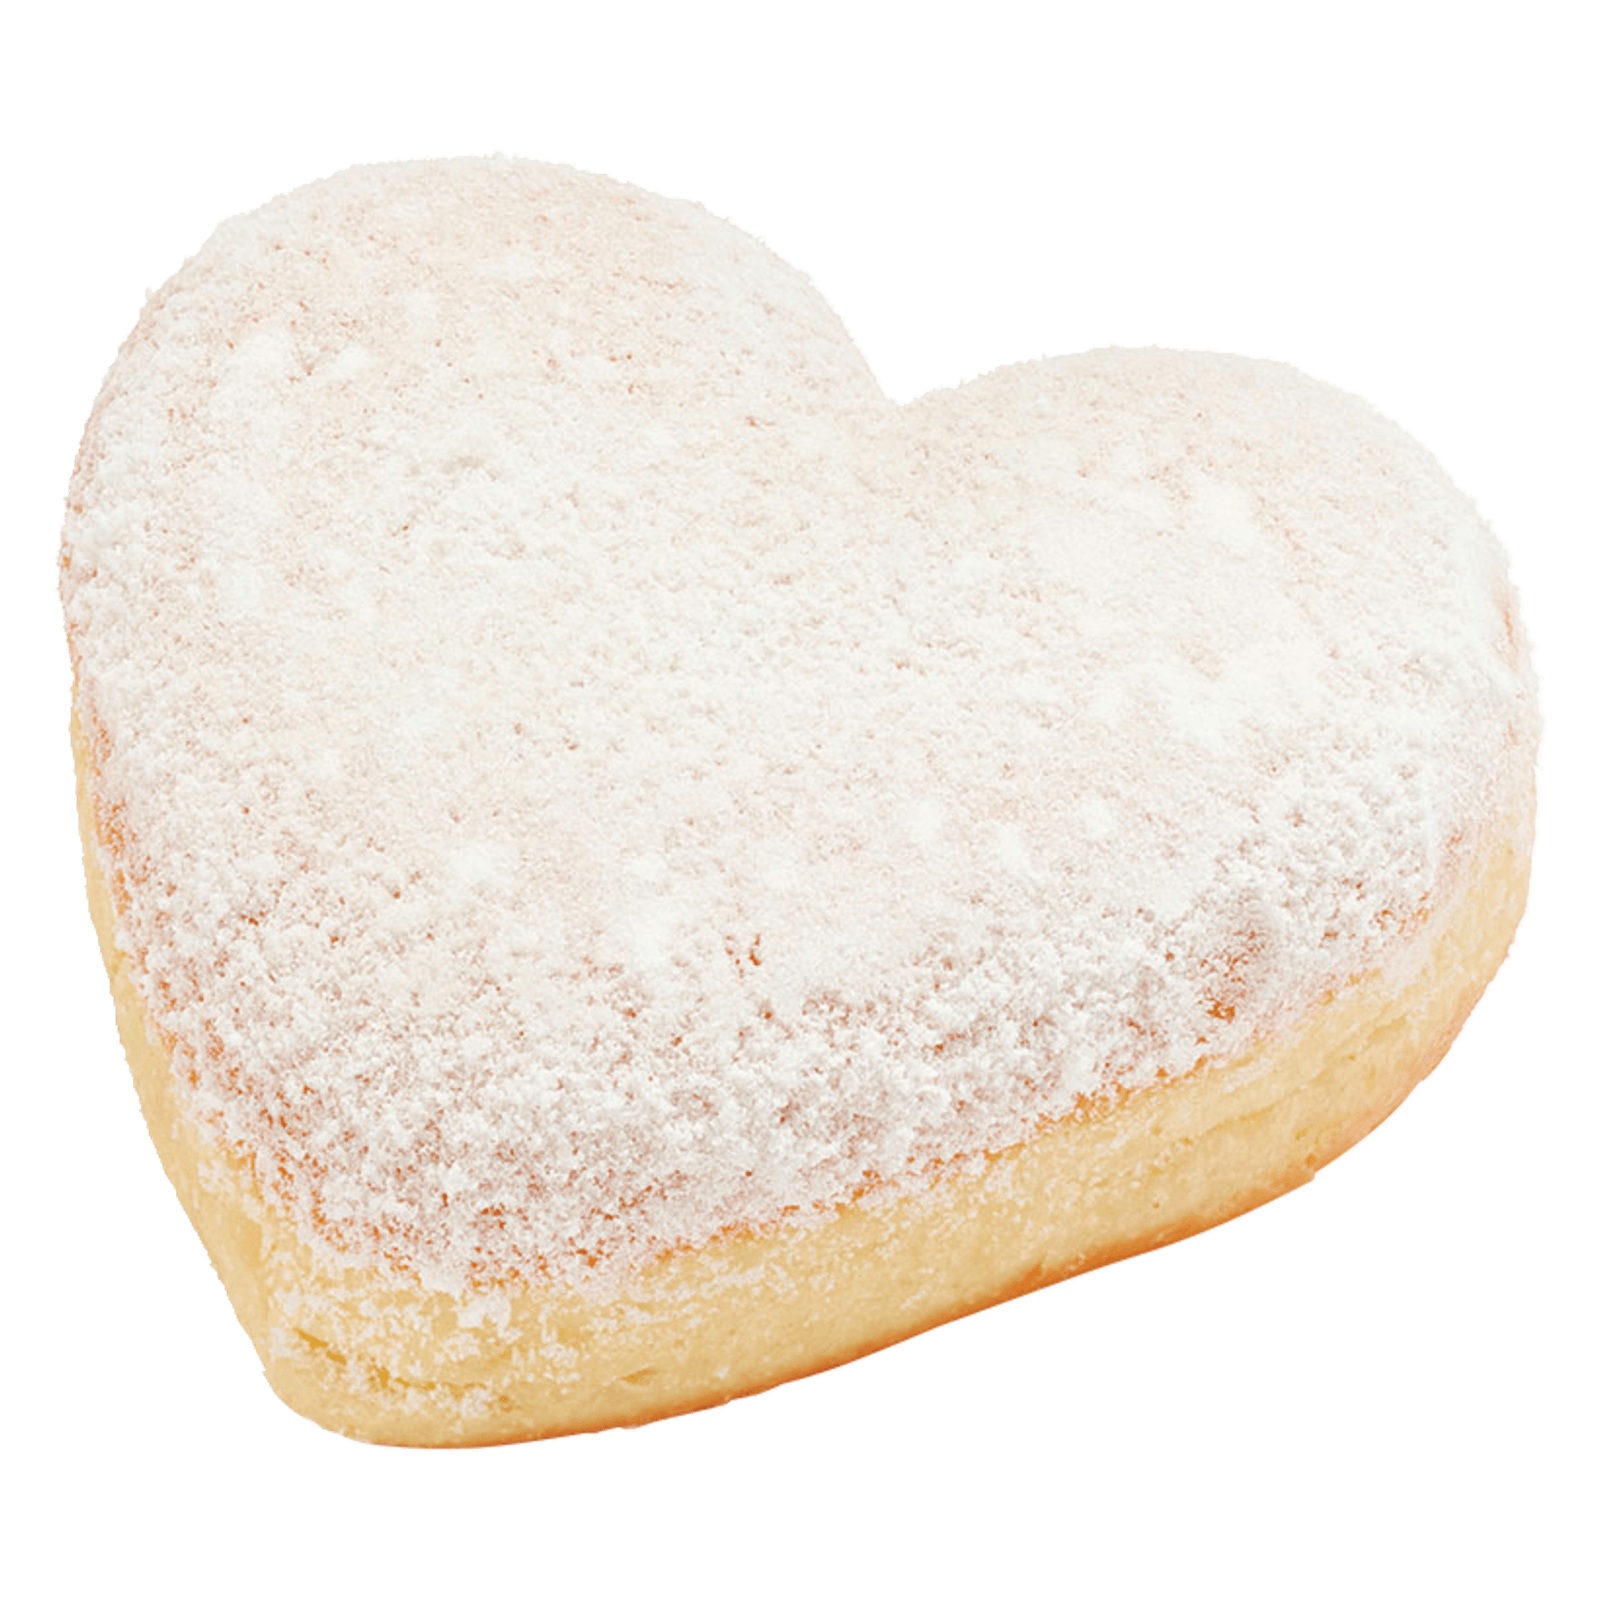 Heart shaped jam doughnuts